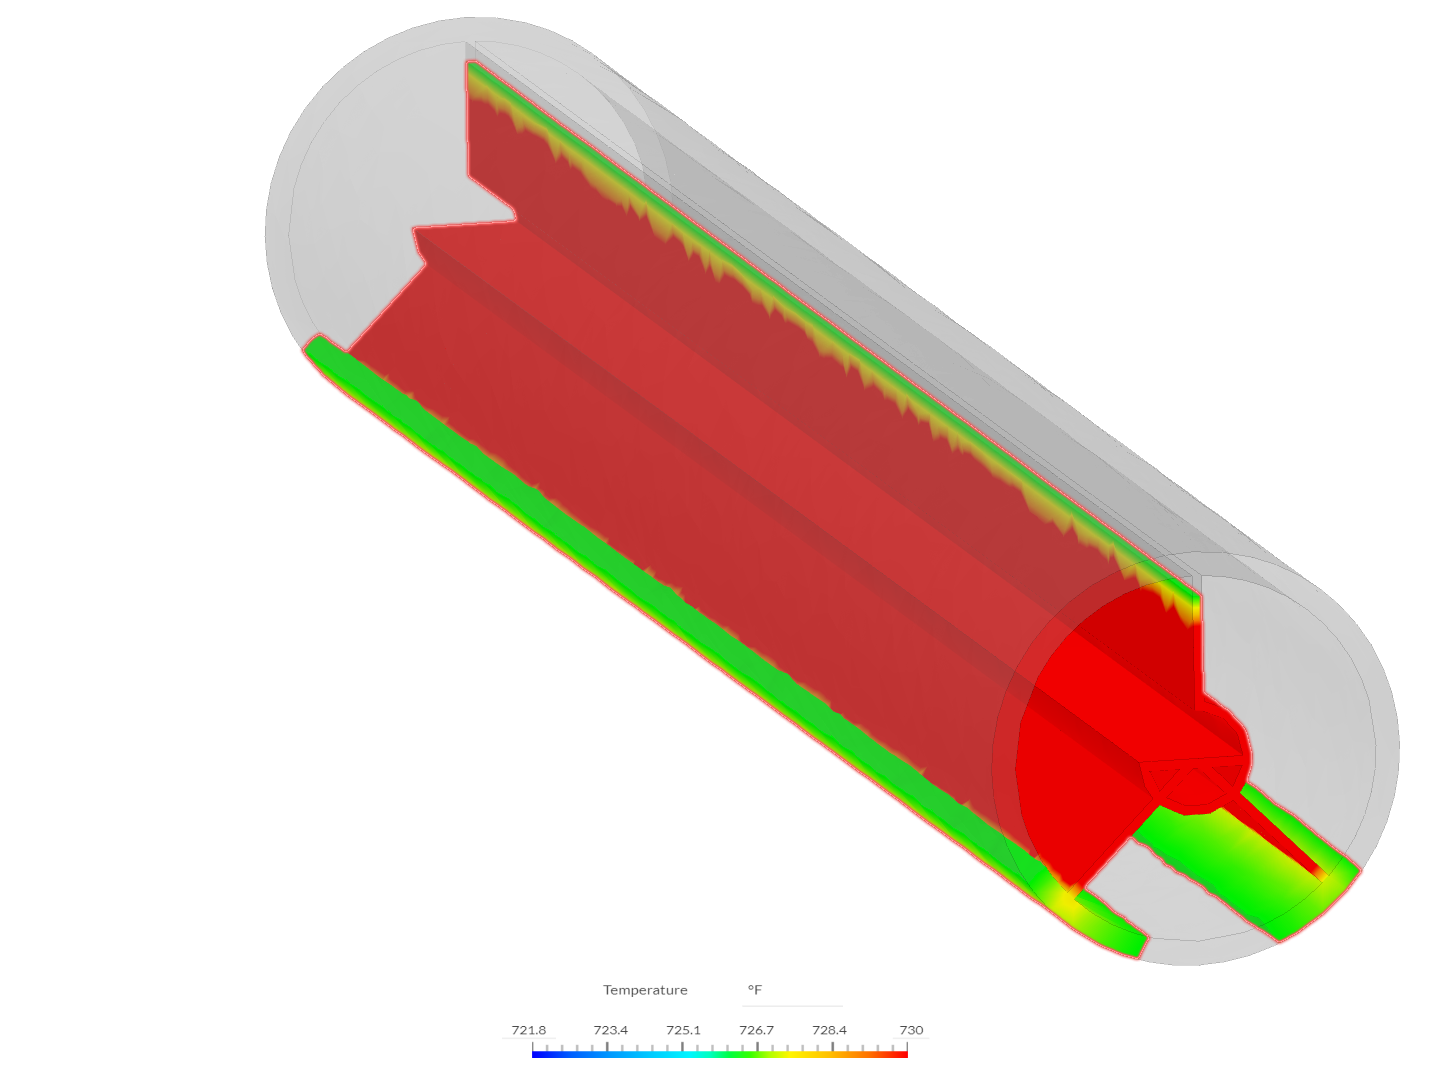 Curling Iron Conduction Heat Transfer Analysis image